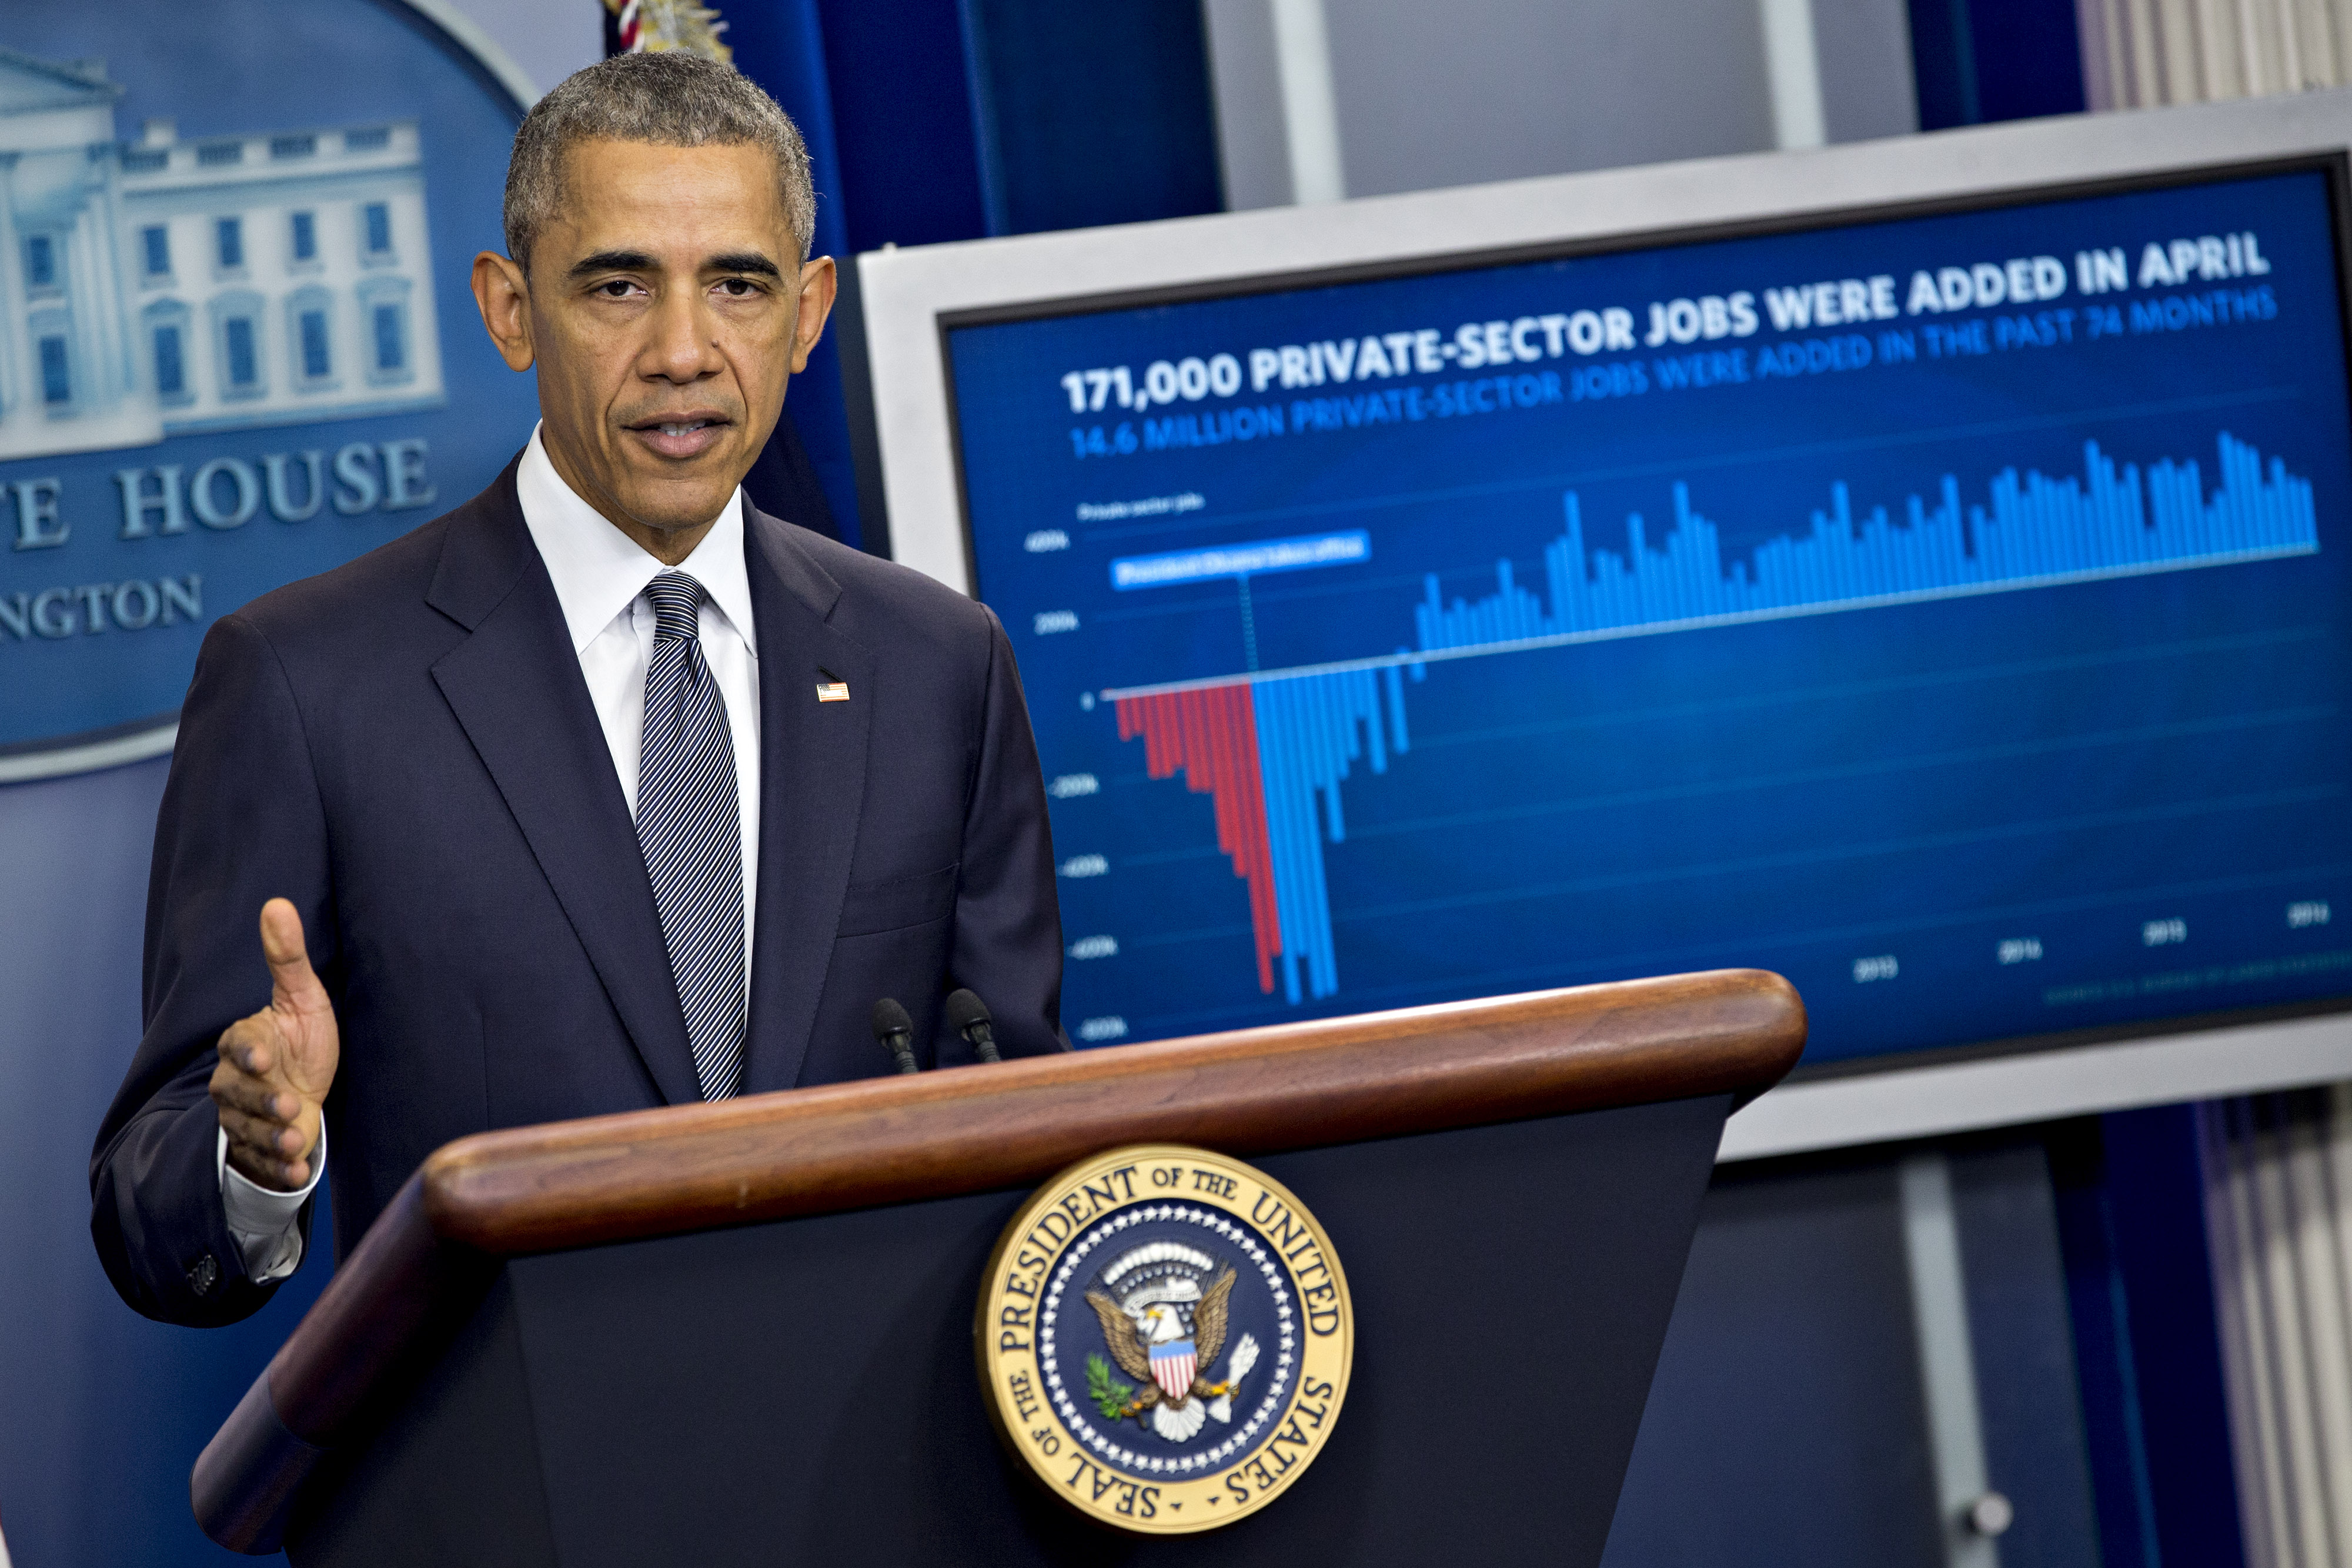 President Barack Obama Makes Statement On The Economy